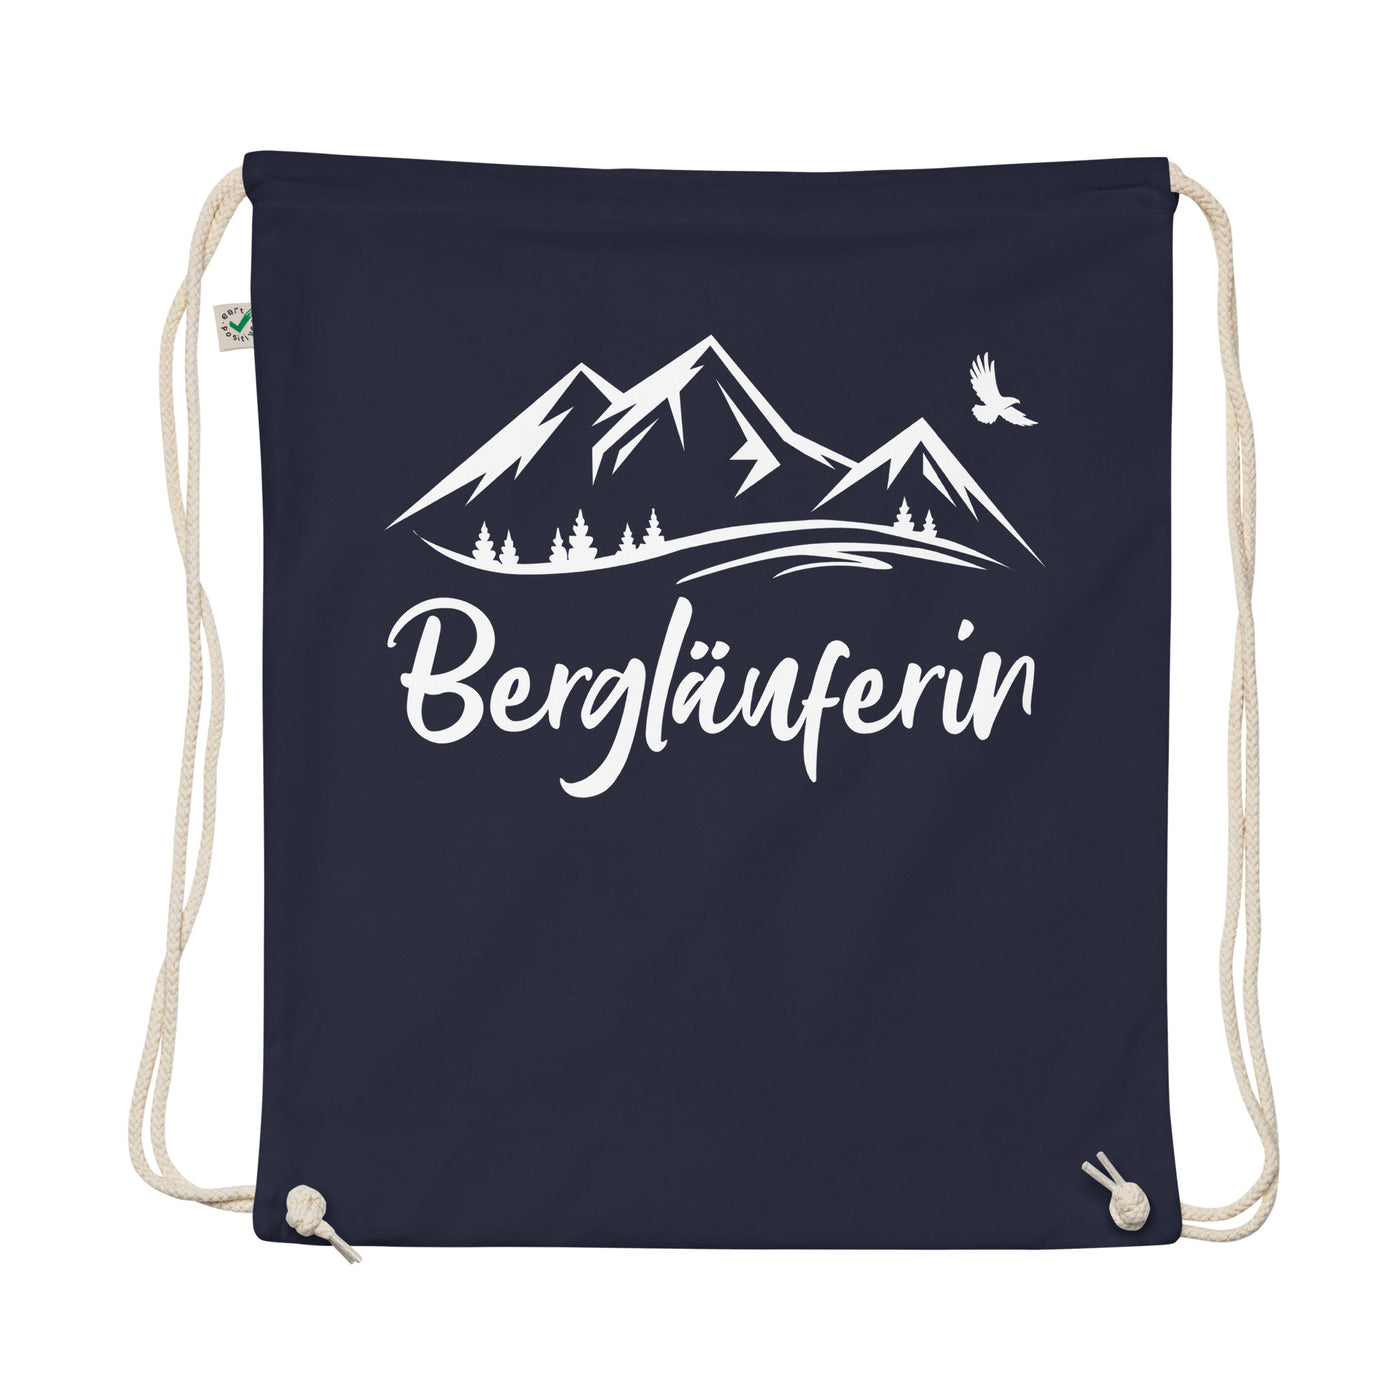 Berglanferin - Organic Turnbeutel berge